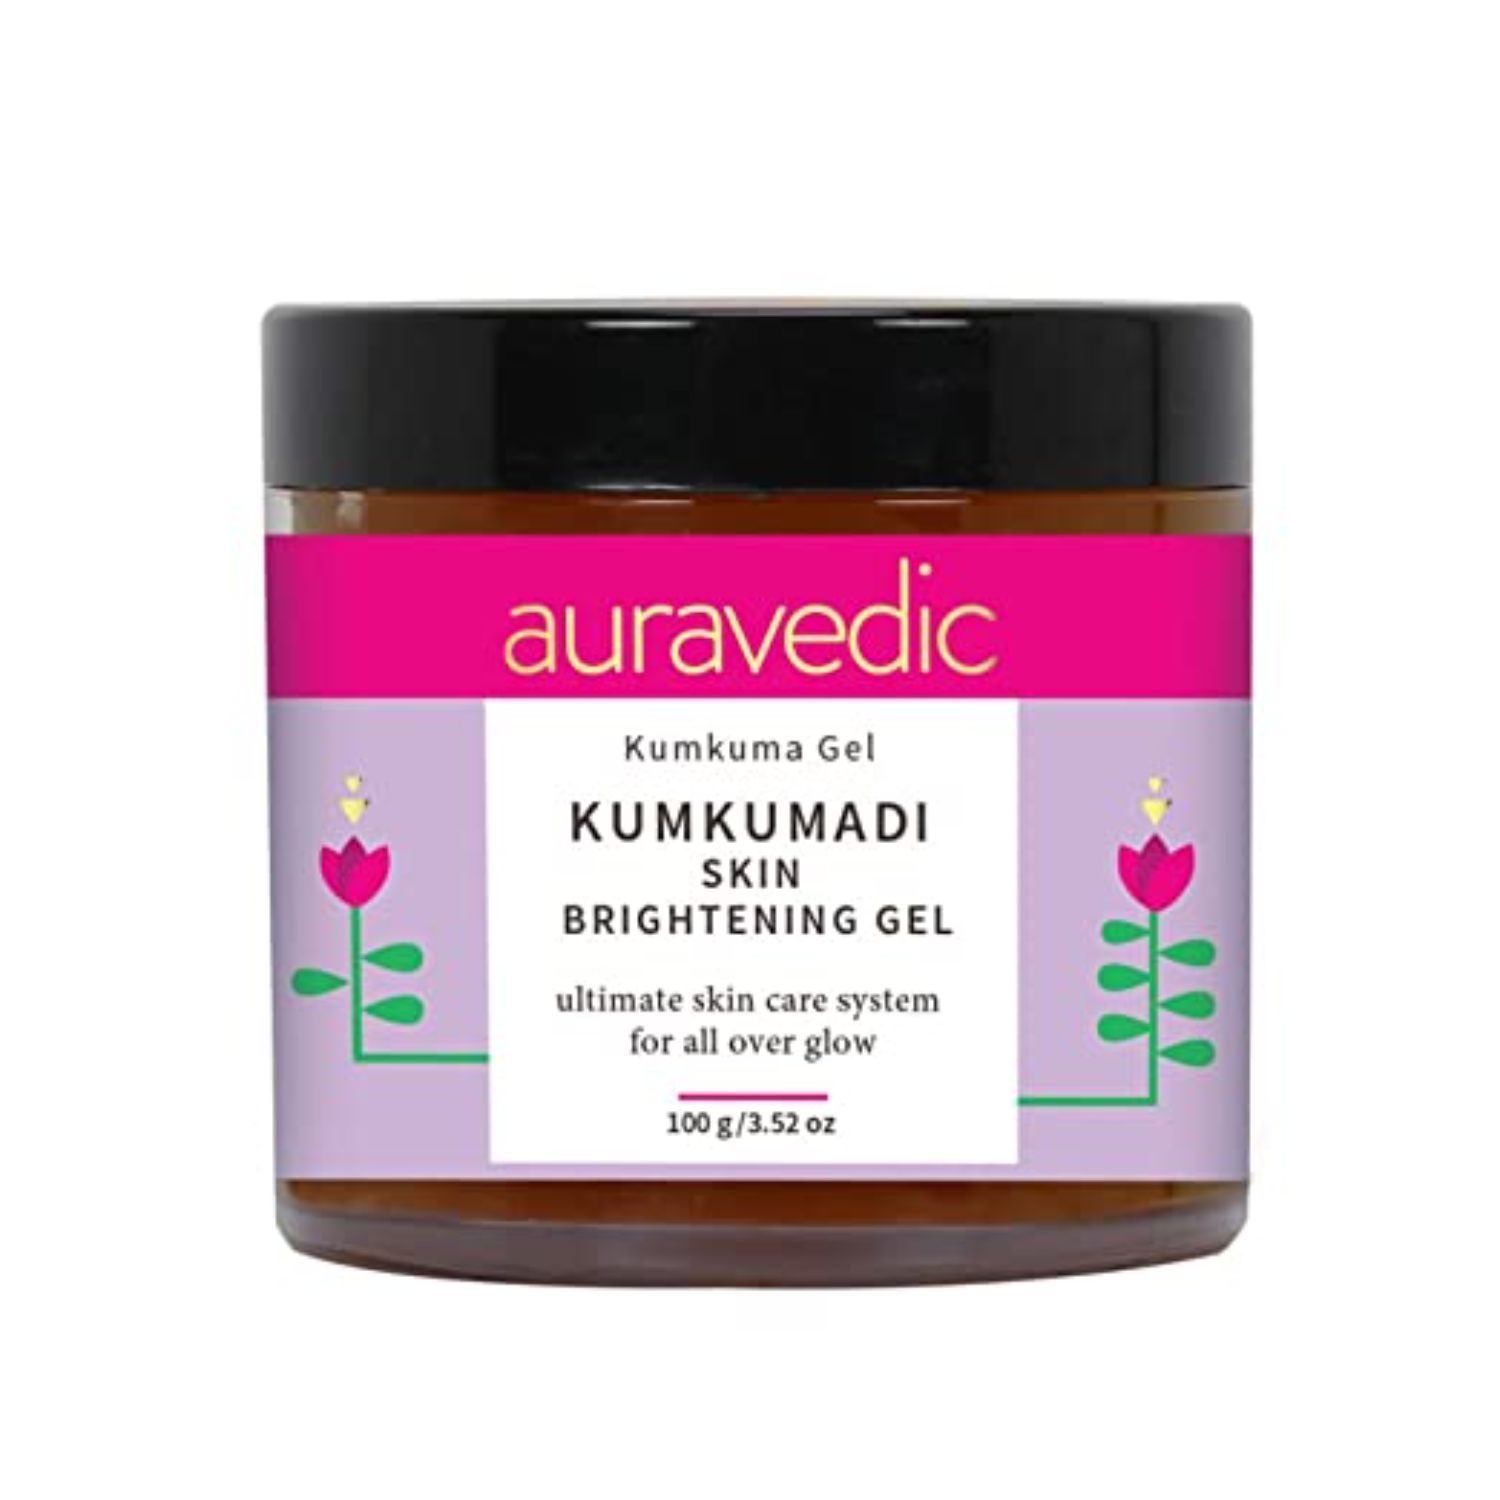 Buy AURAVEDIC Kumkumadi Skin Brightening Gel, 100 G with Kumkumadi Tailam.Kumkumadi Face Oil for Glowing skin- Kumkumadi Gel for Pigmentation,Dark Spots,Skin Whitening,Skin Brightening,Skin Lightening for Women / Men - Purplle